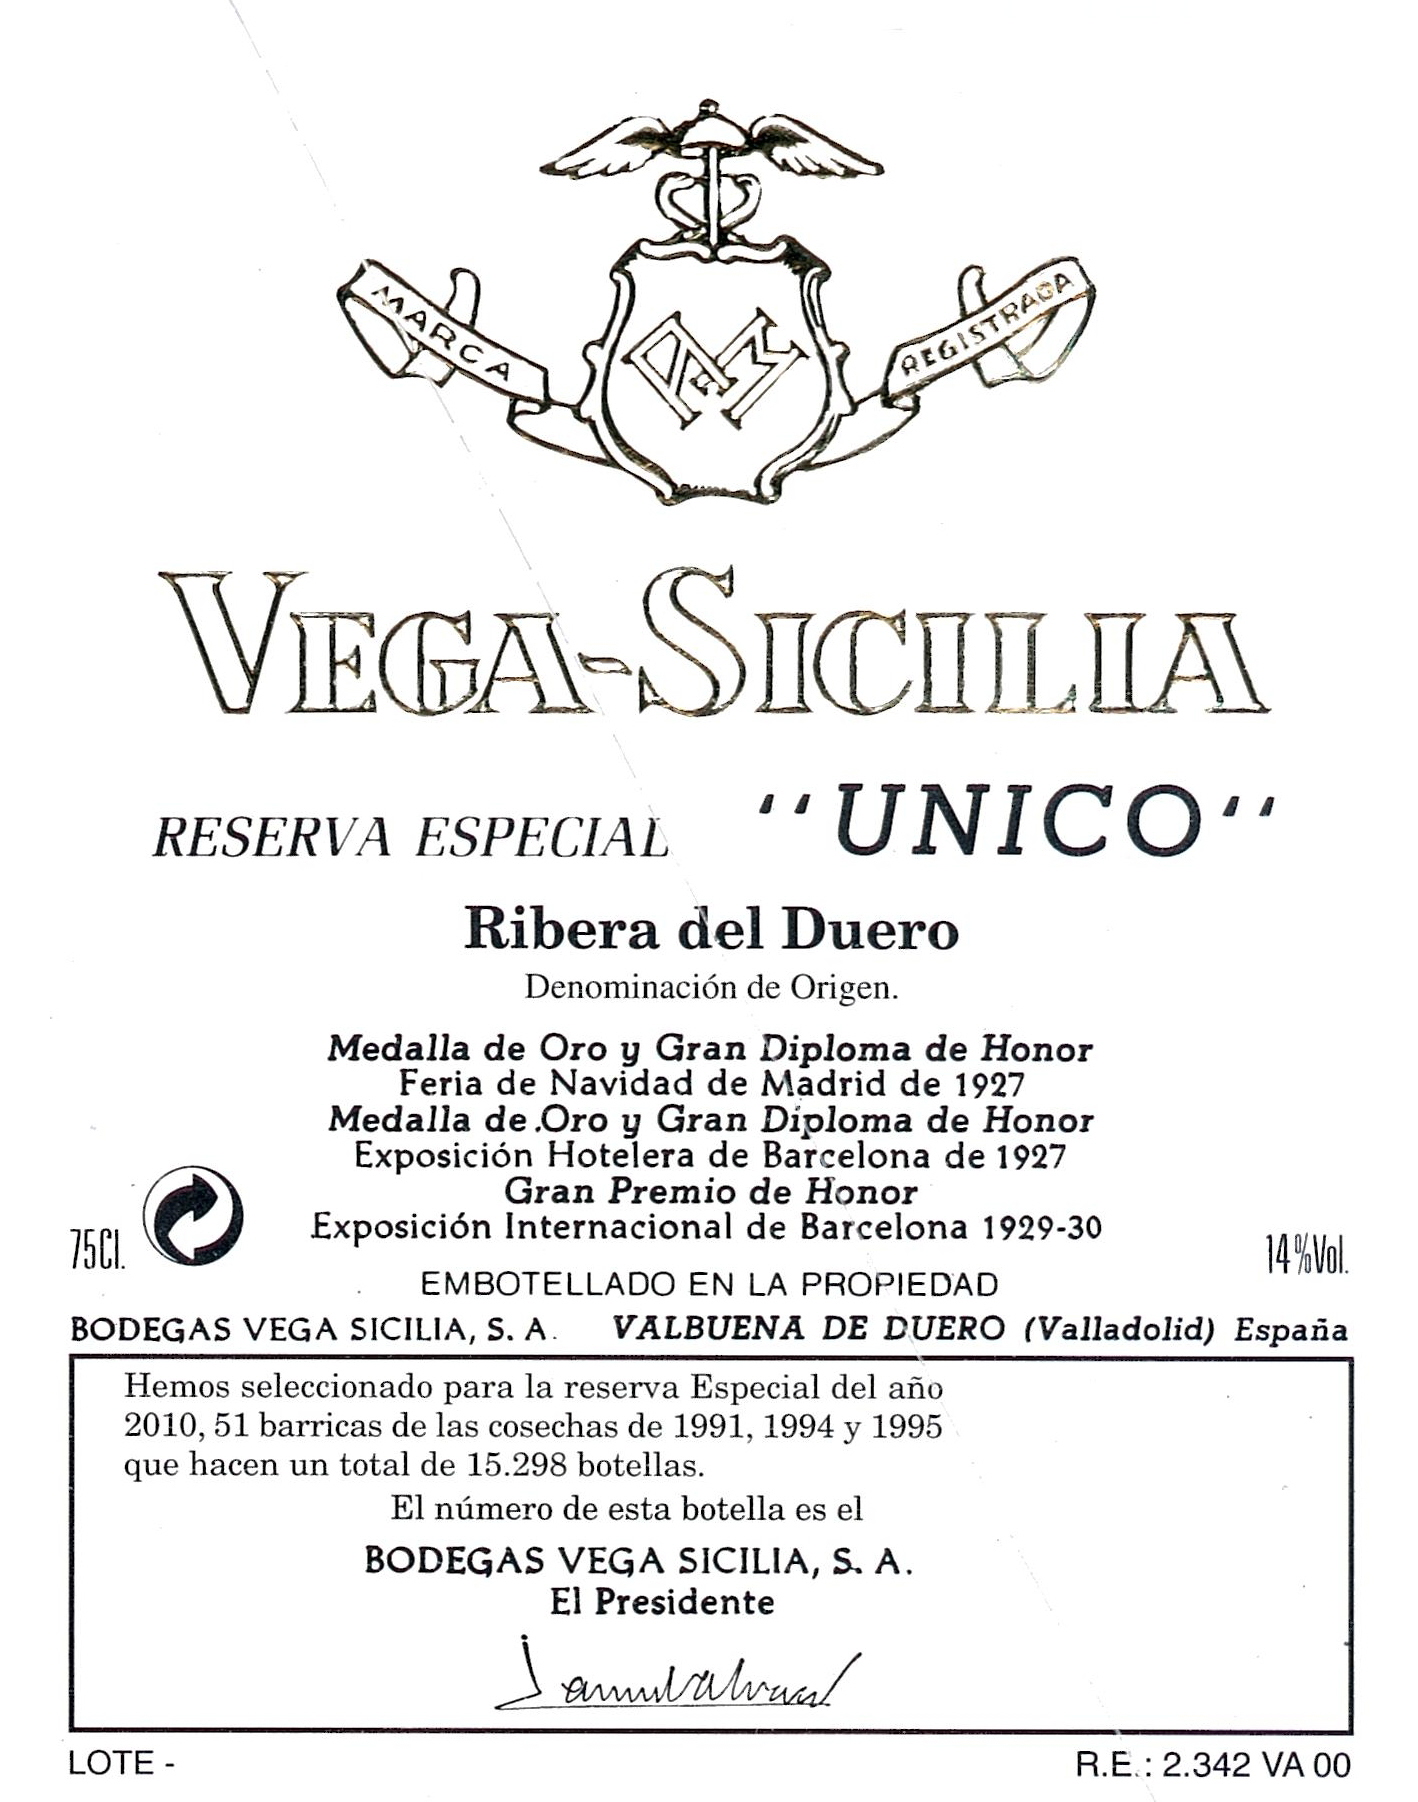 2004 Vega Sicilia Unico Ribera Del Duero image